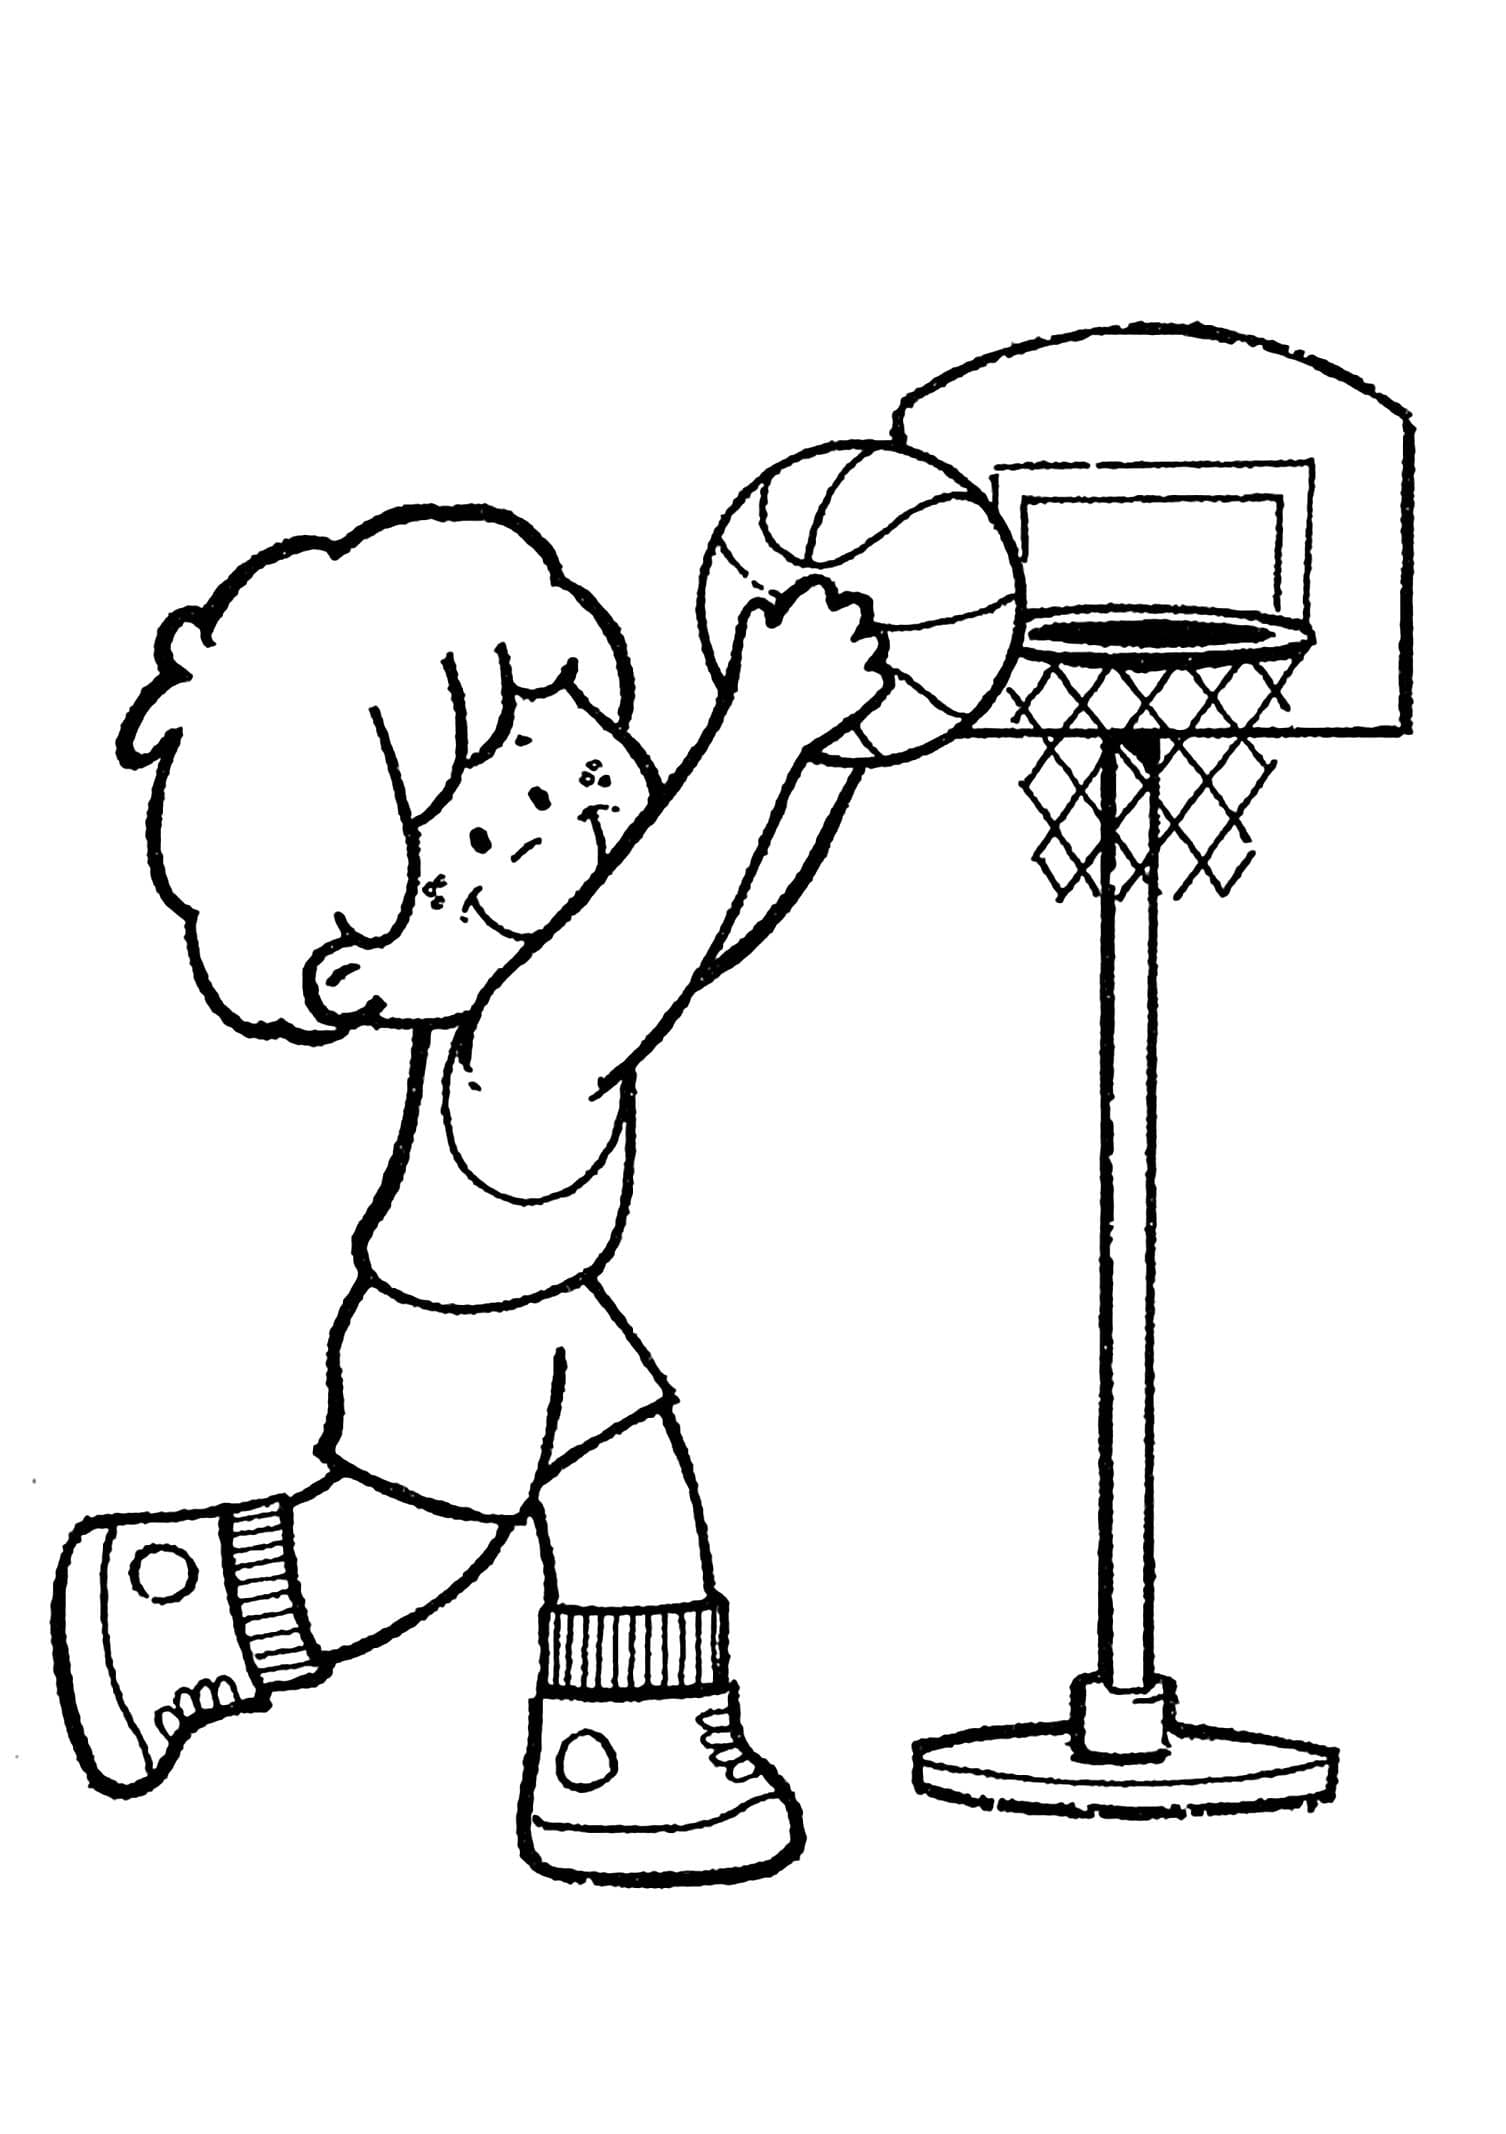 Children Playing Basketball